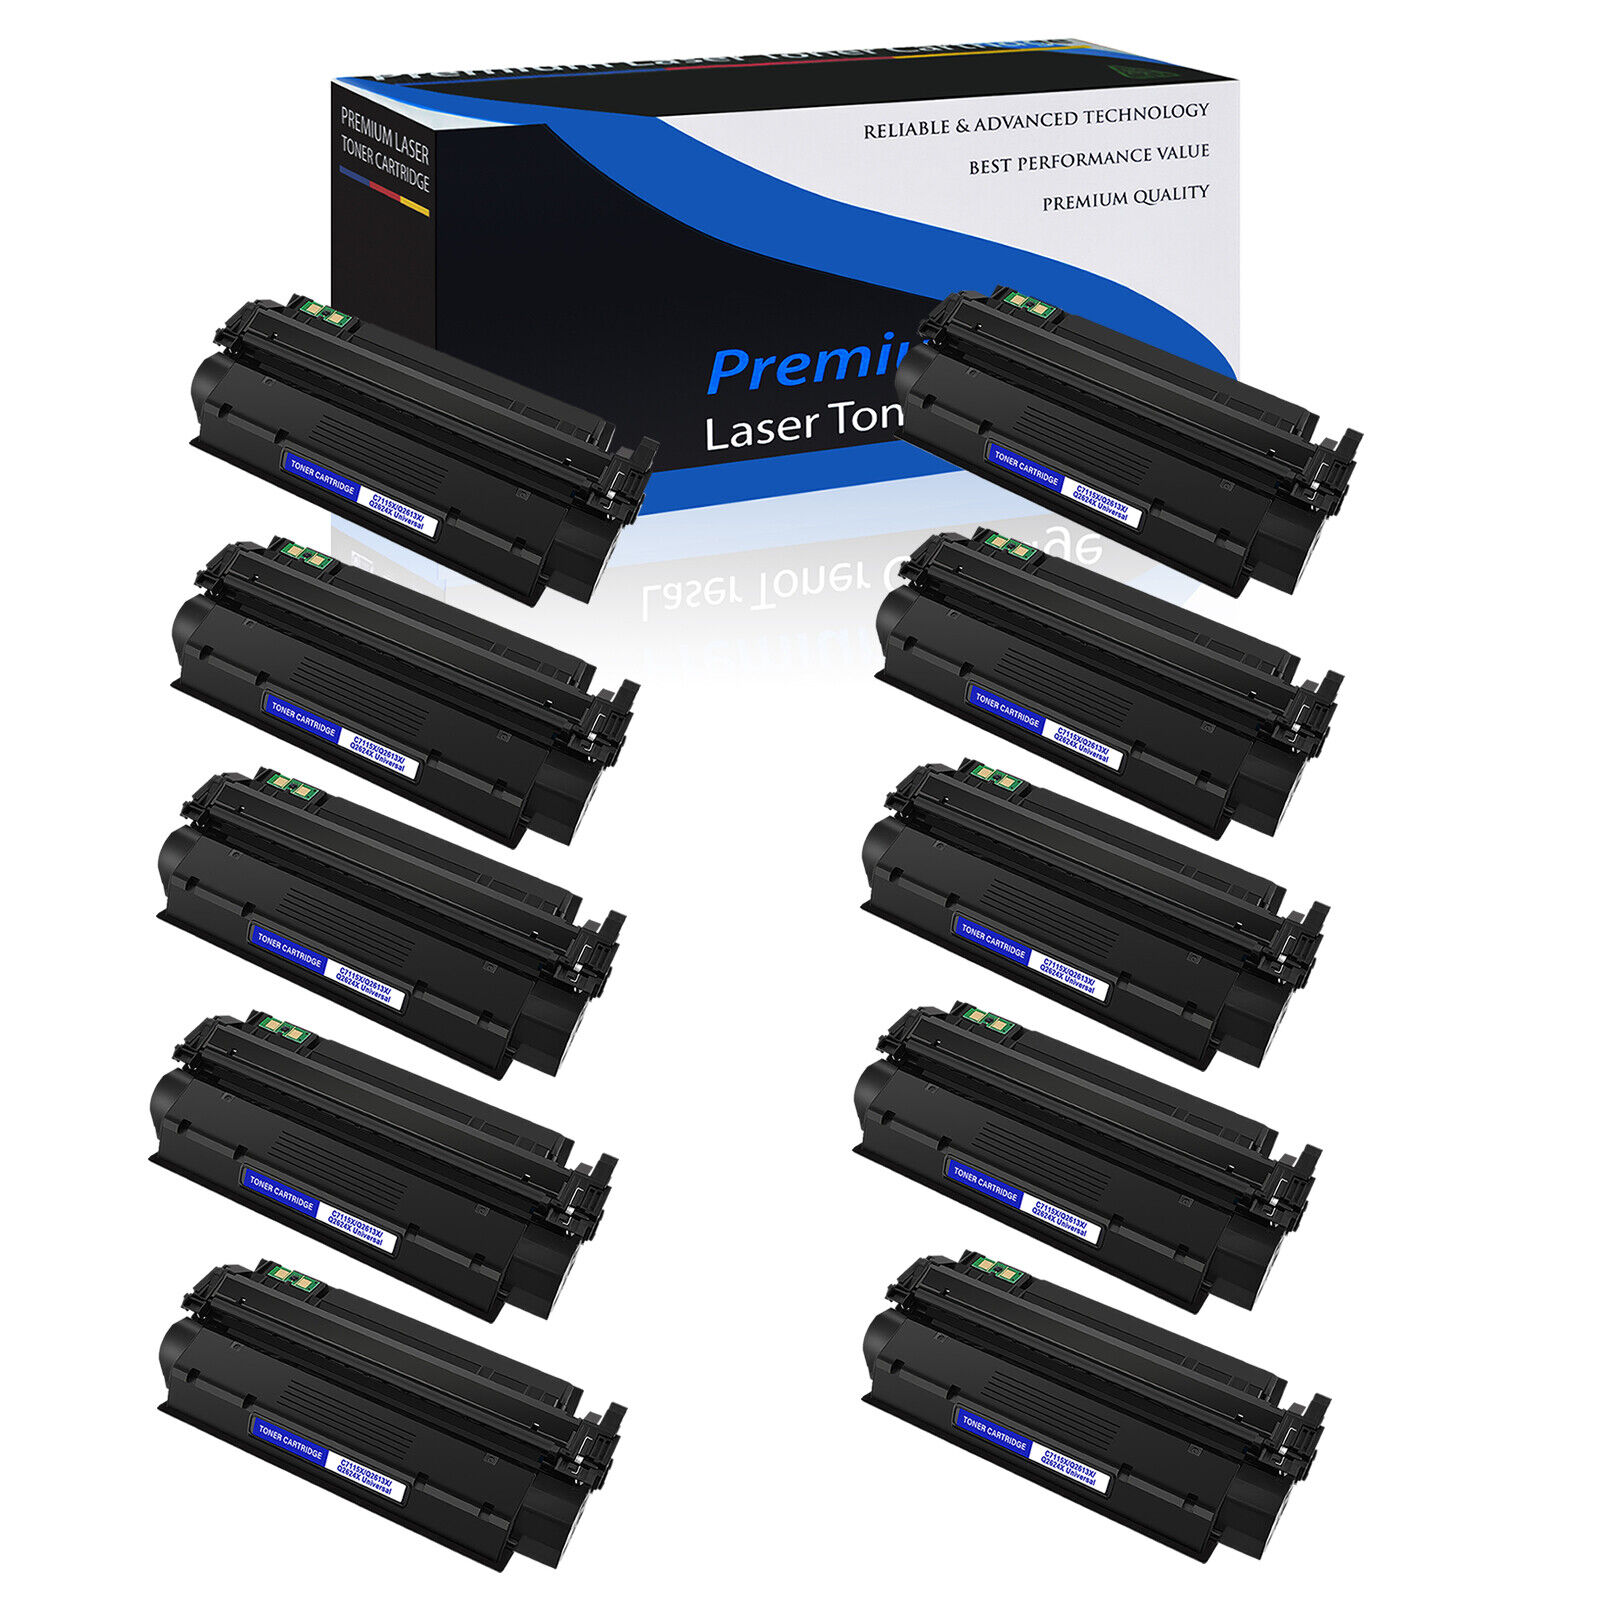 10 Packs Q2613X 13X Black Toner Cartridges Compatible with HP 1300 1300n 1300XI